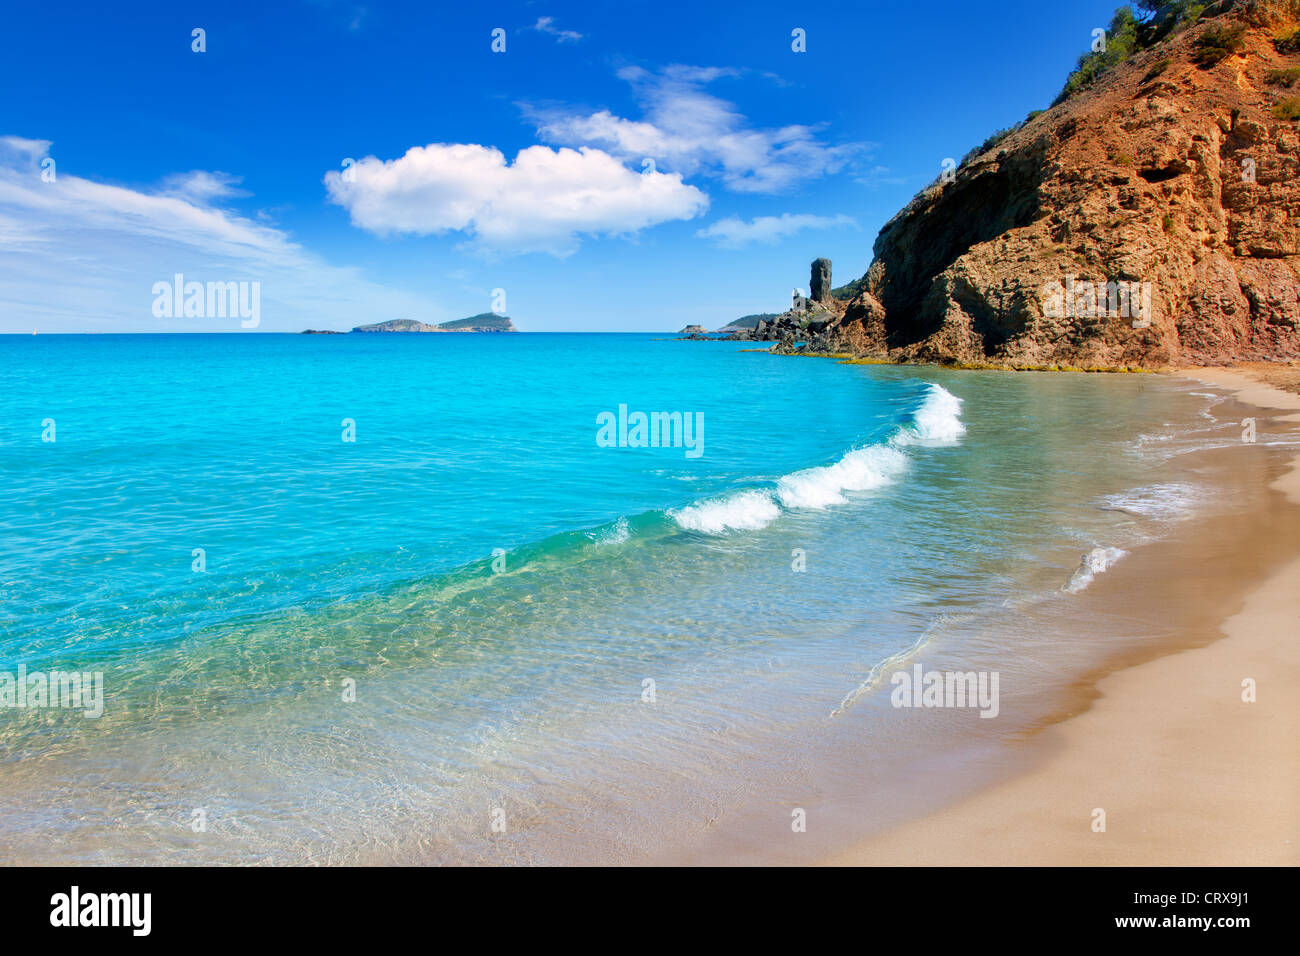 Aiguas Blanques Agua blanca Ibiza beach with turquoise water Stock Photo